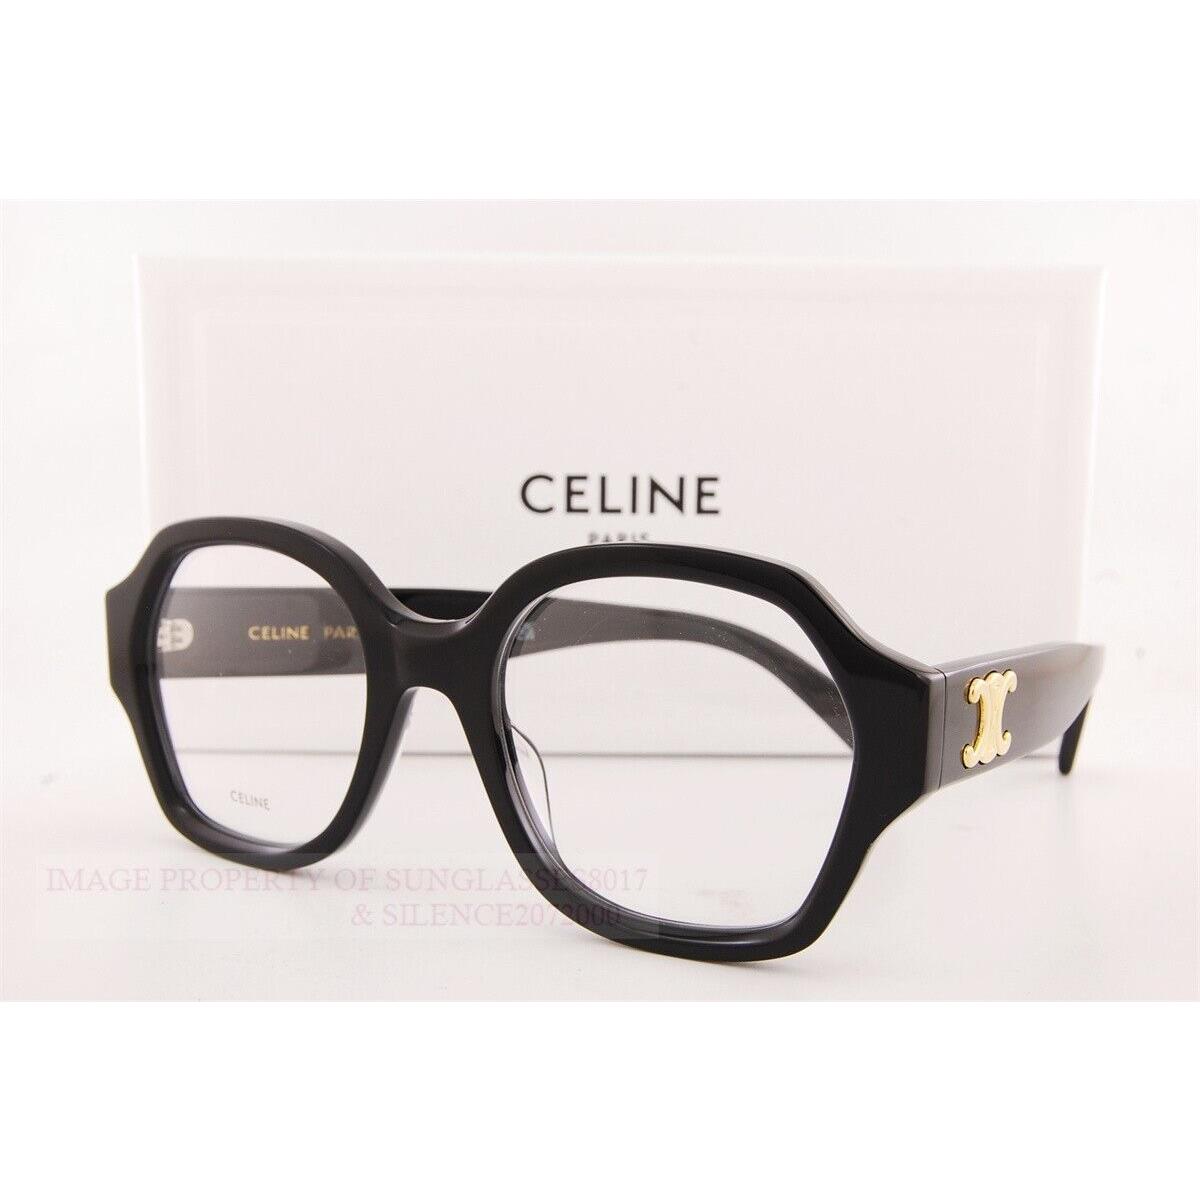 Celine Eyeglass Frames CL 50134I 001 Black For Men Women Size 52mm